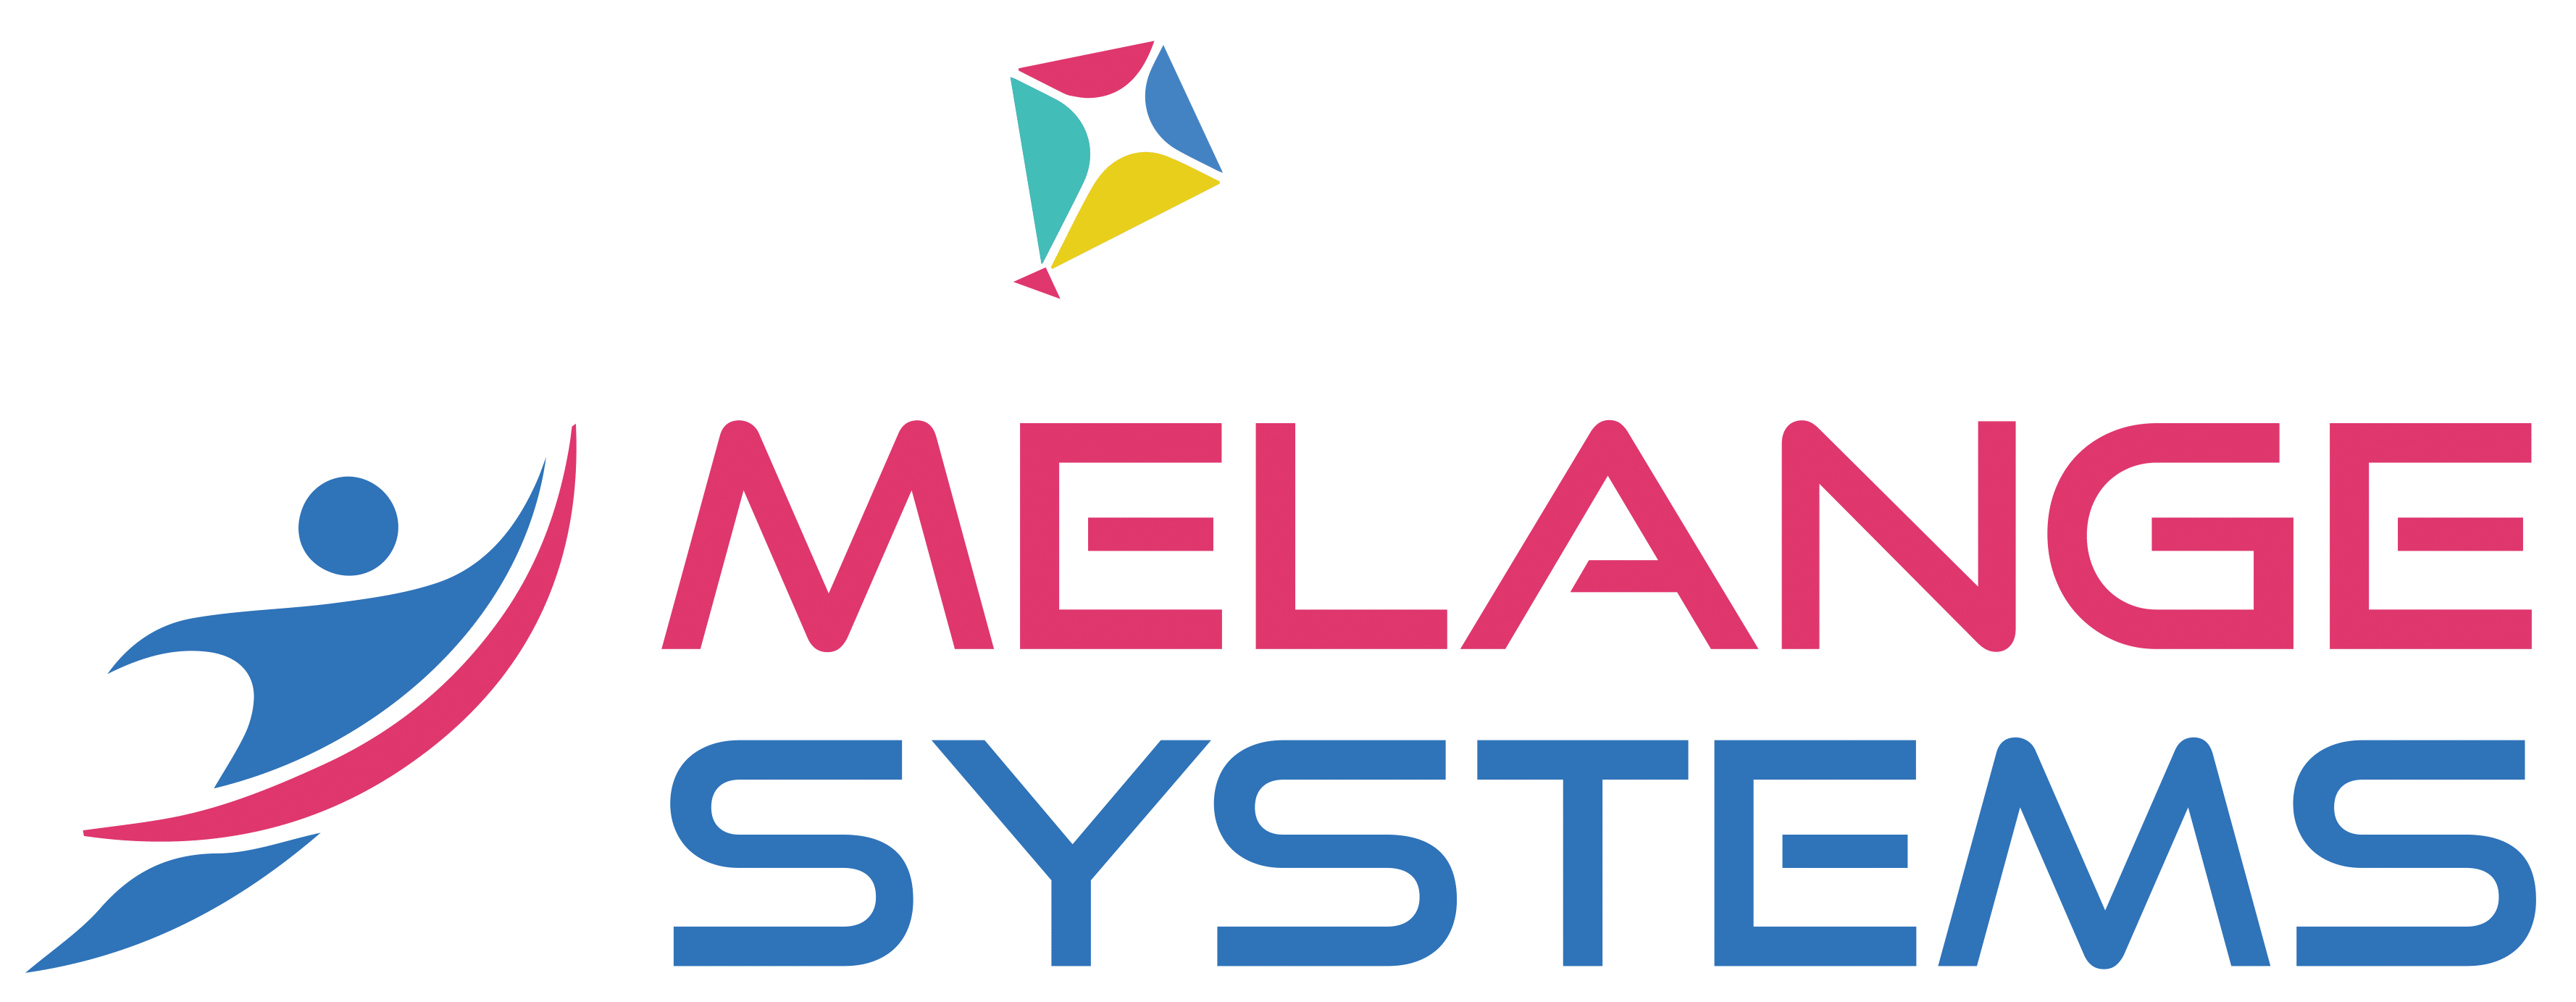 Melange systems